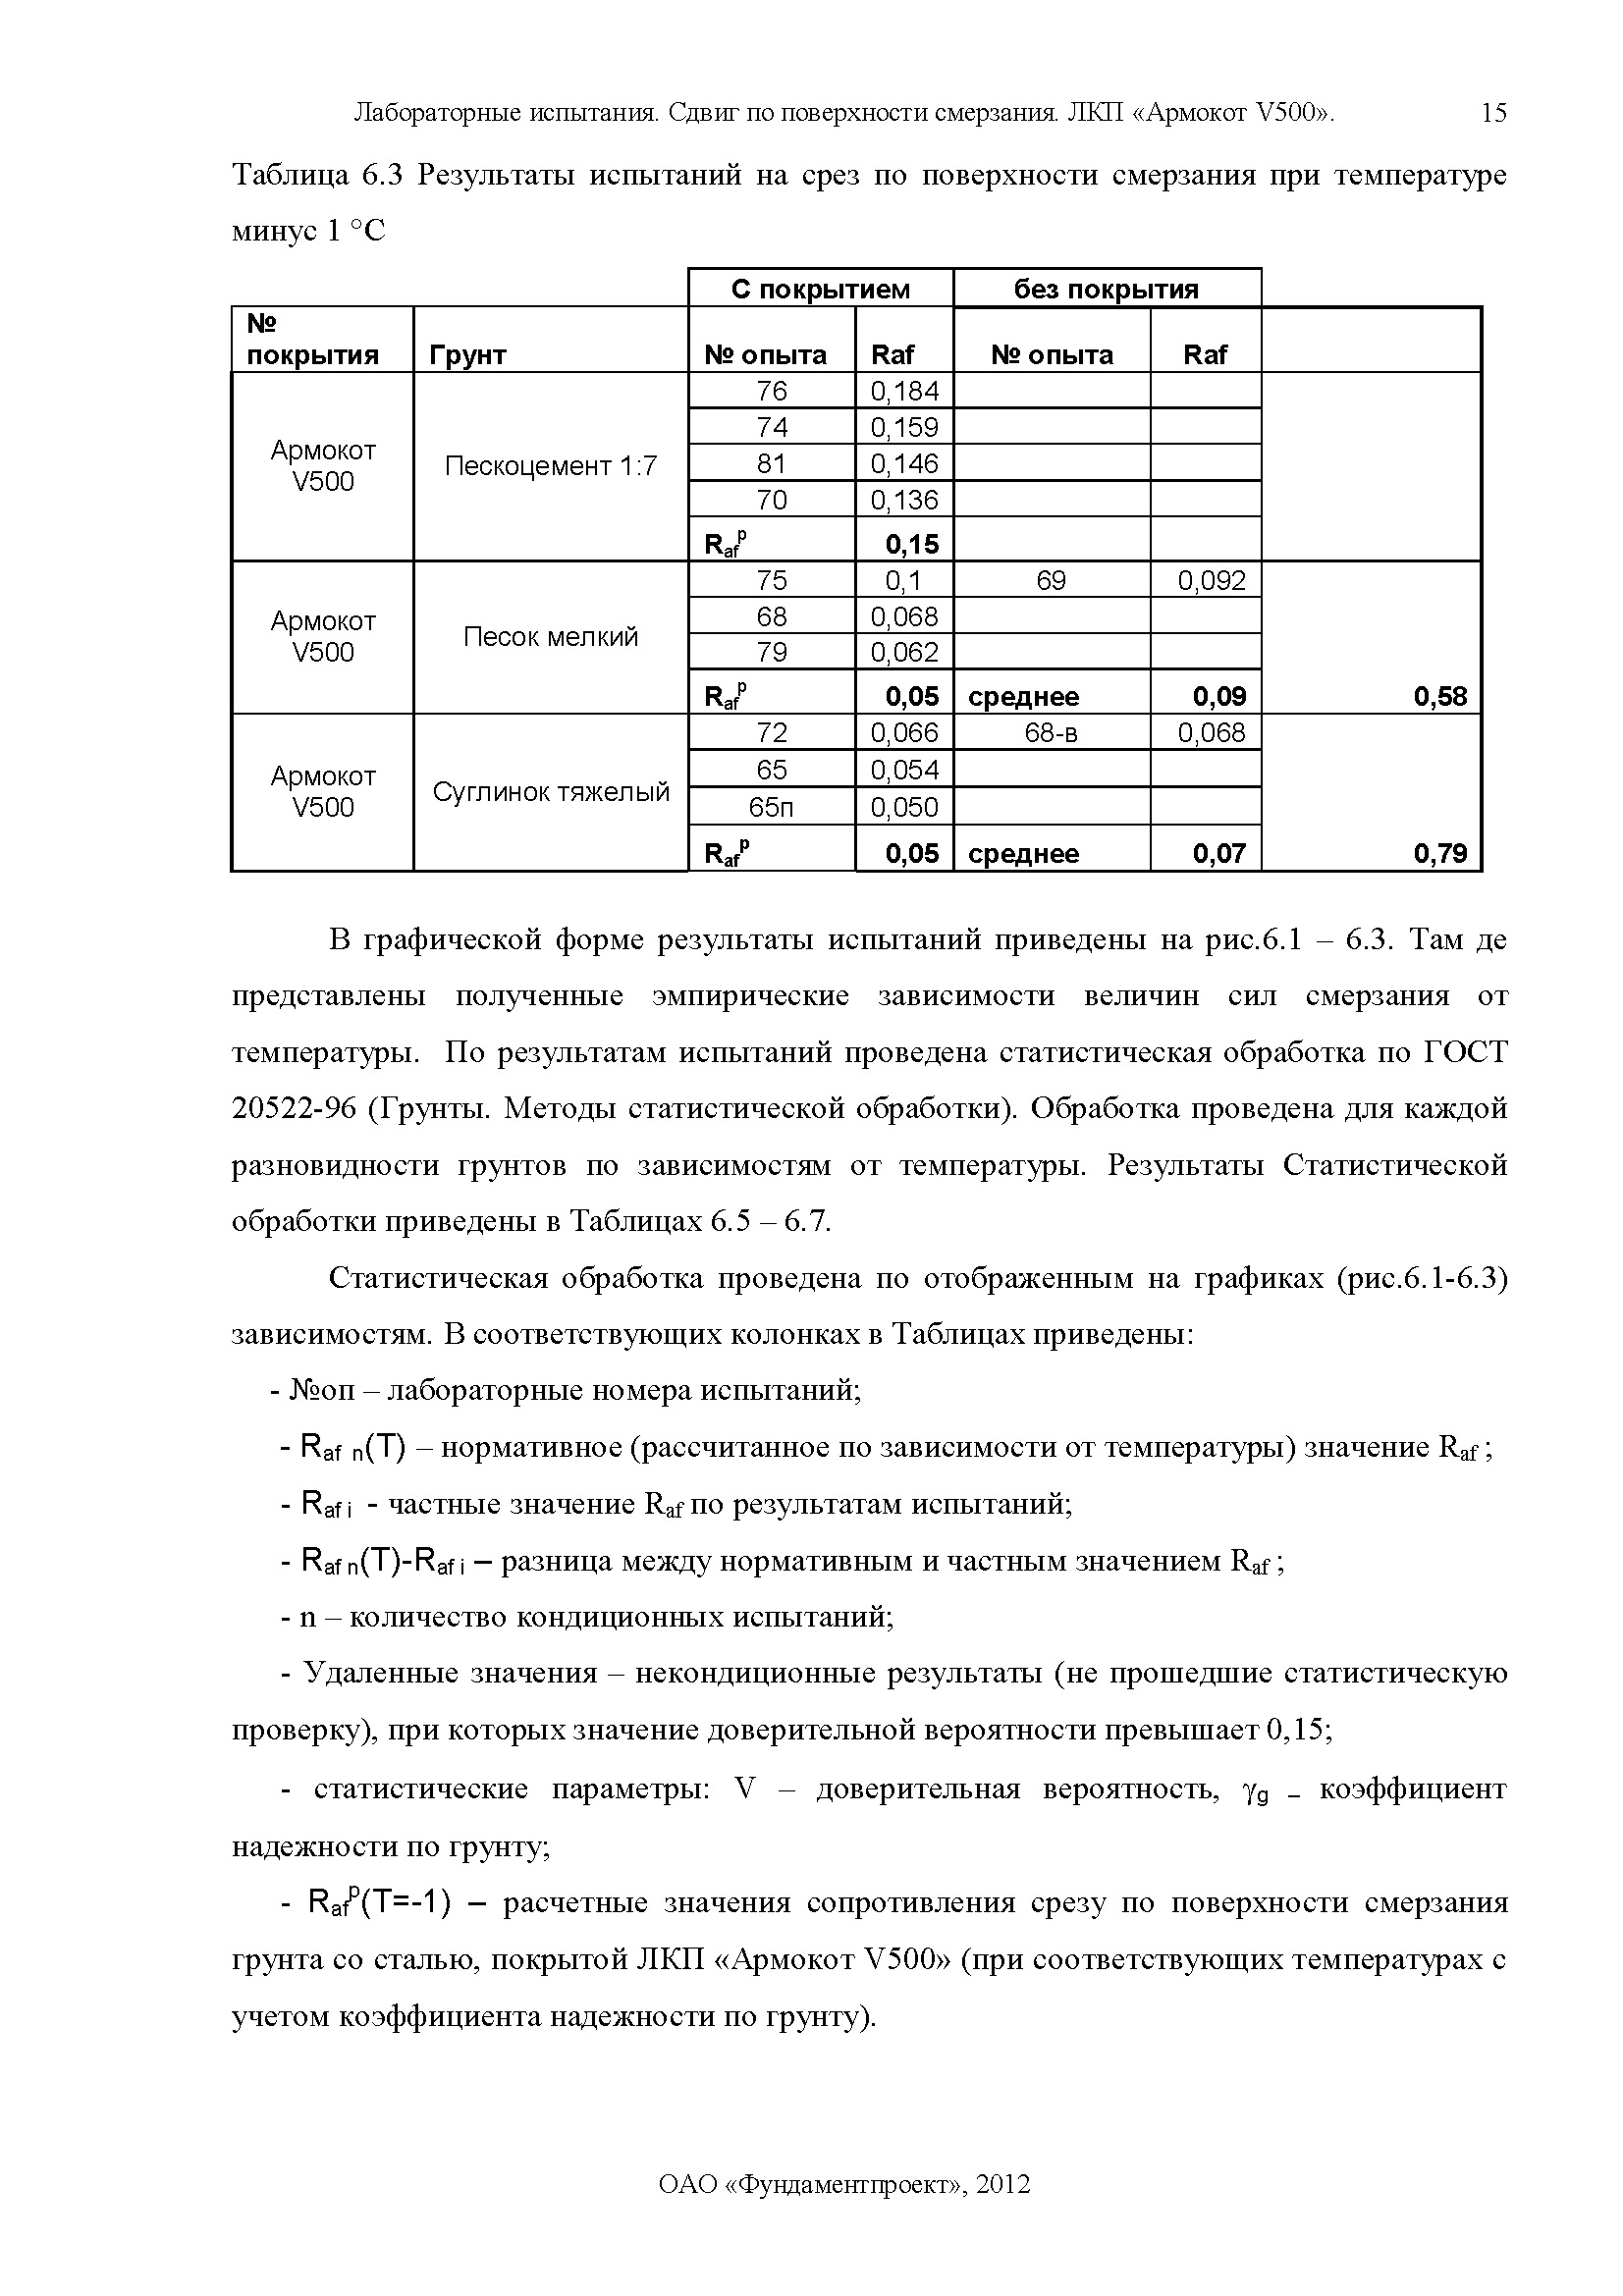 Отчет по сваям Армокот V500 Фундаментпроект_Страница_15